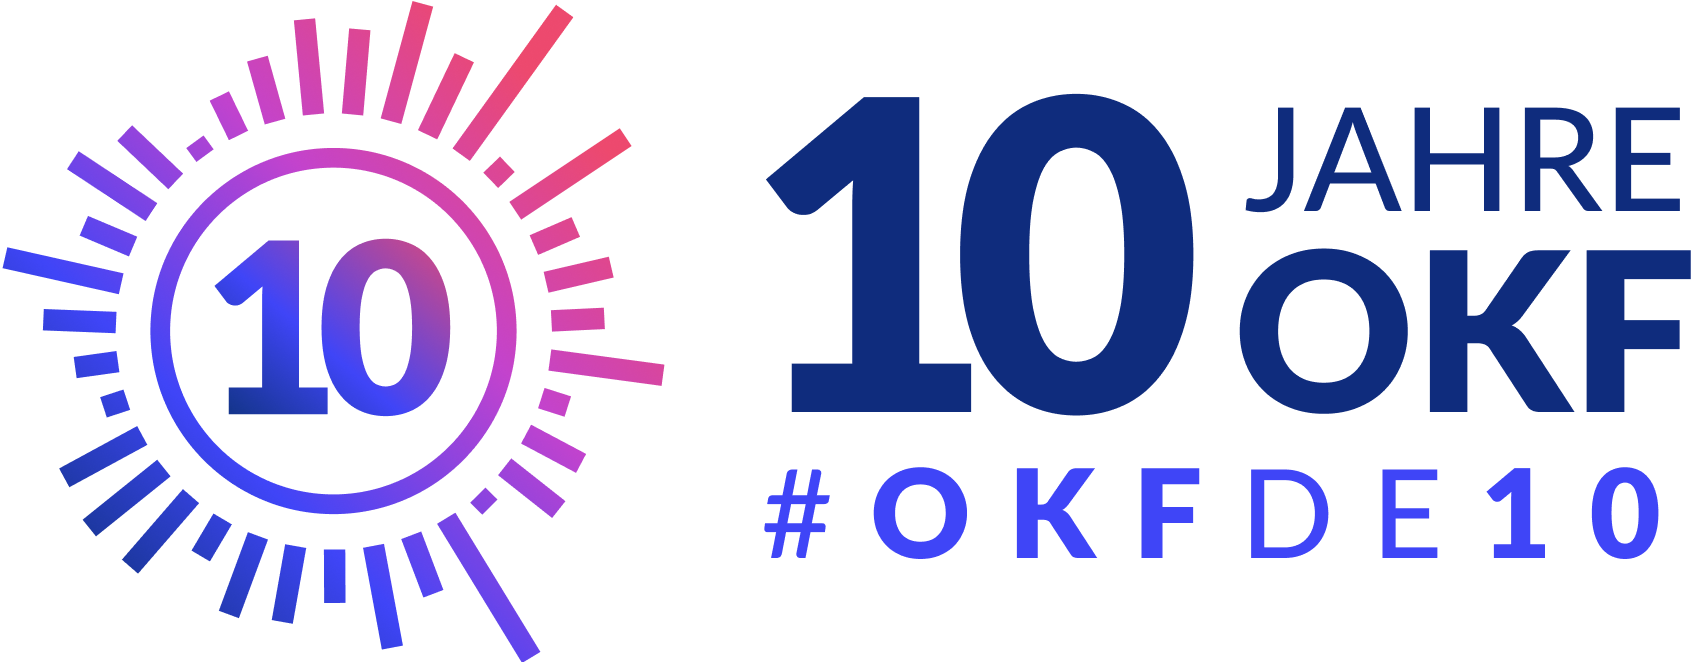 OKFN 10th anniversary logo